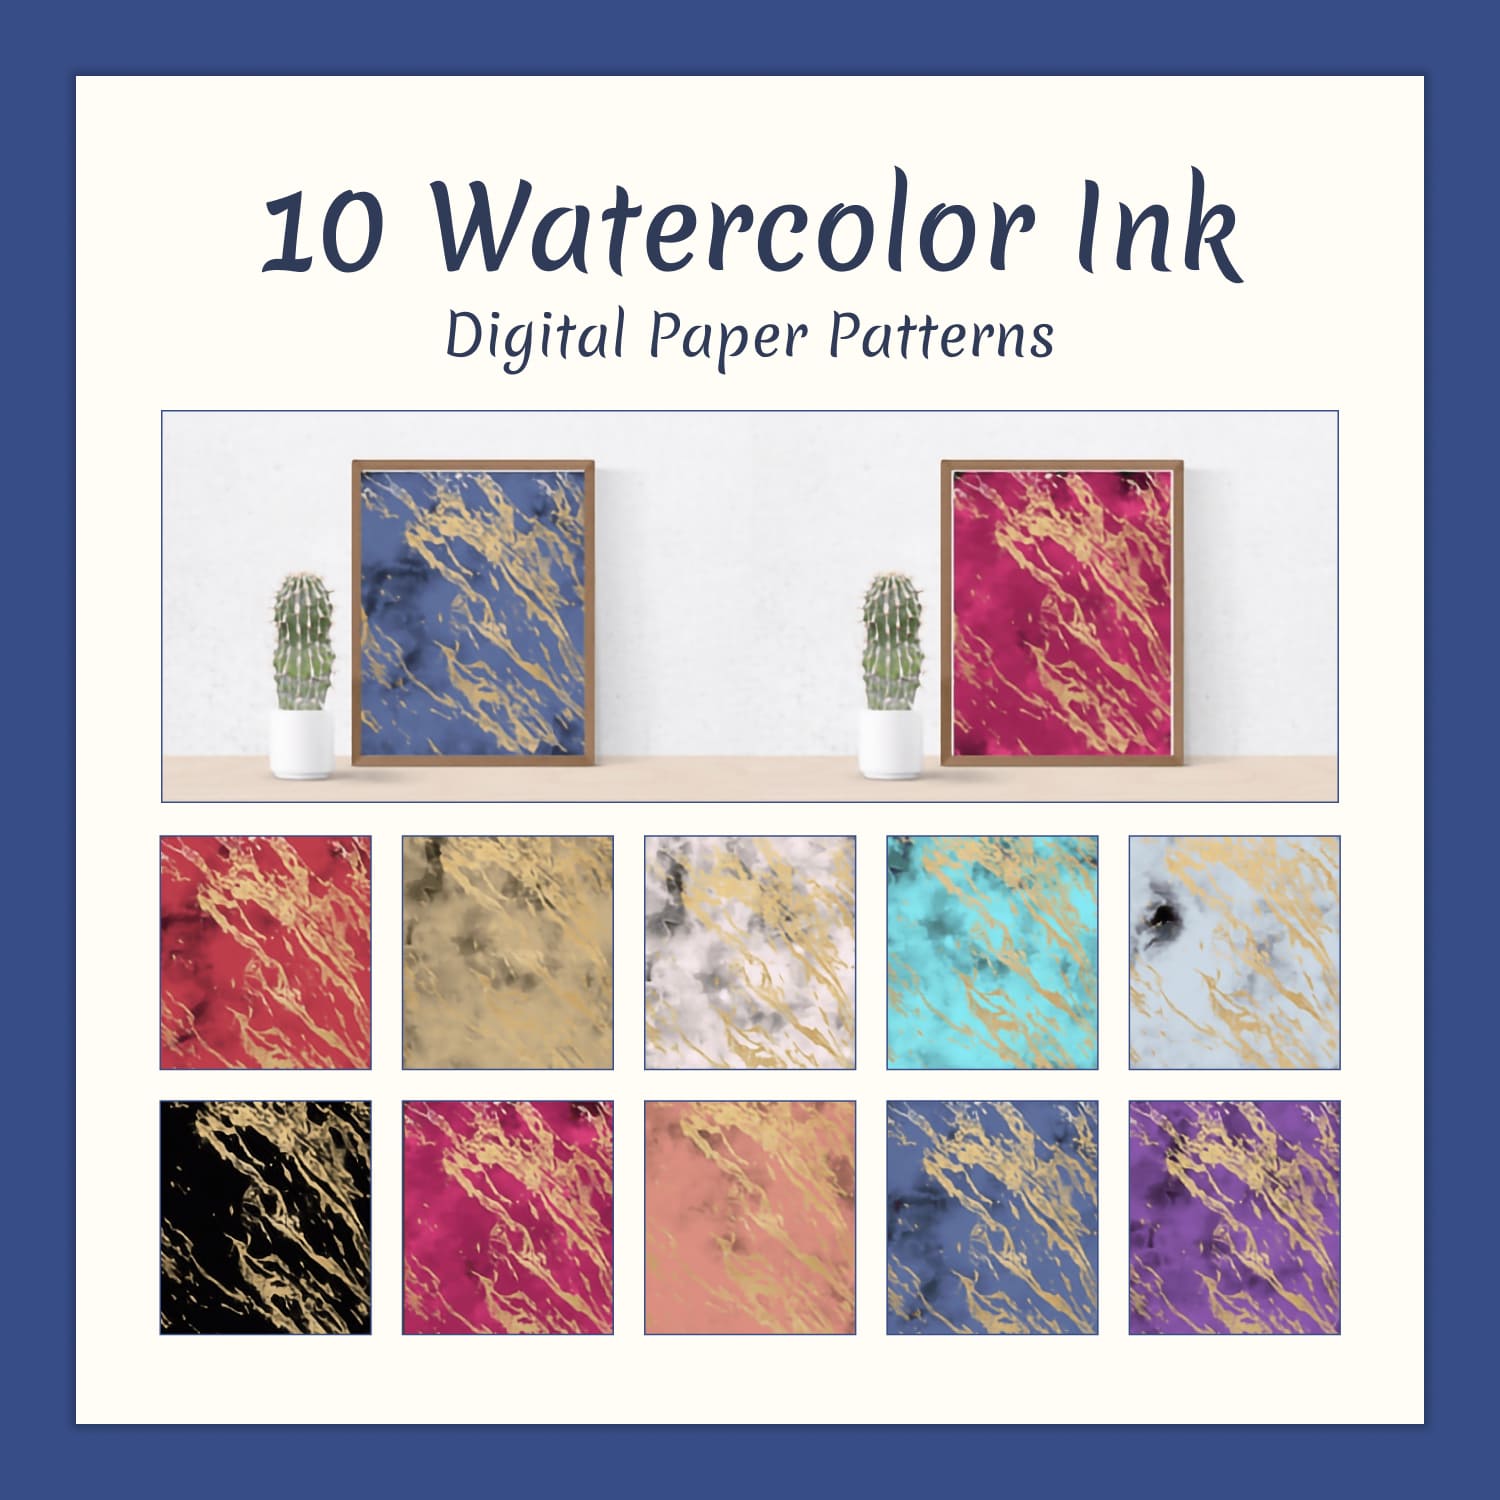 10 Watercolor Ink Digital Paper Patterns.